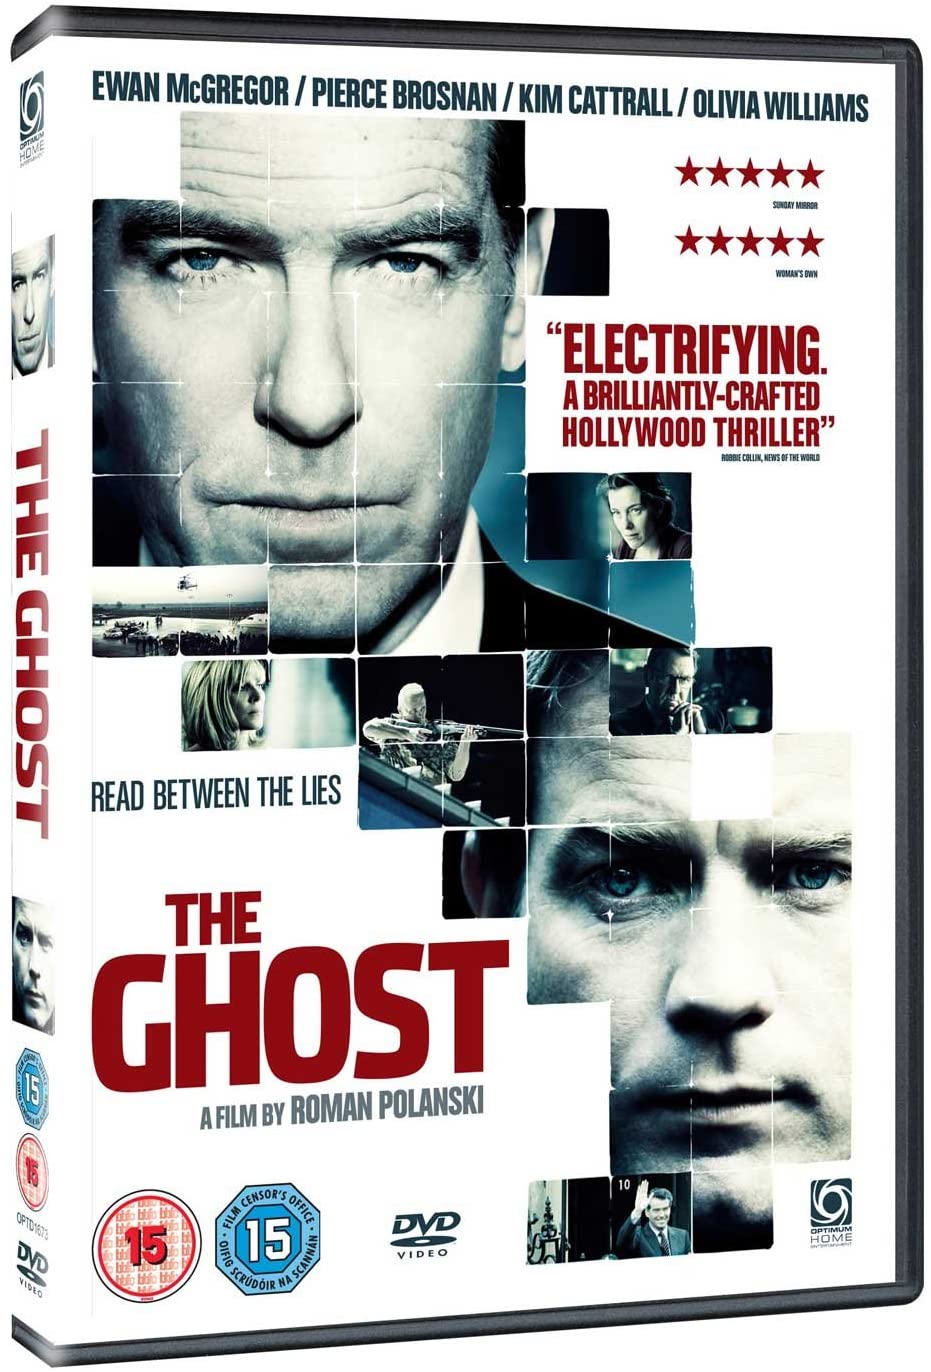 The Ghost - Thriller/Drama [DVD]